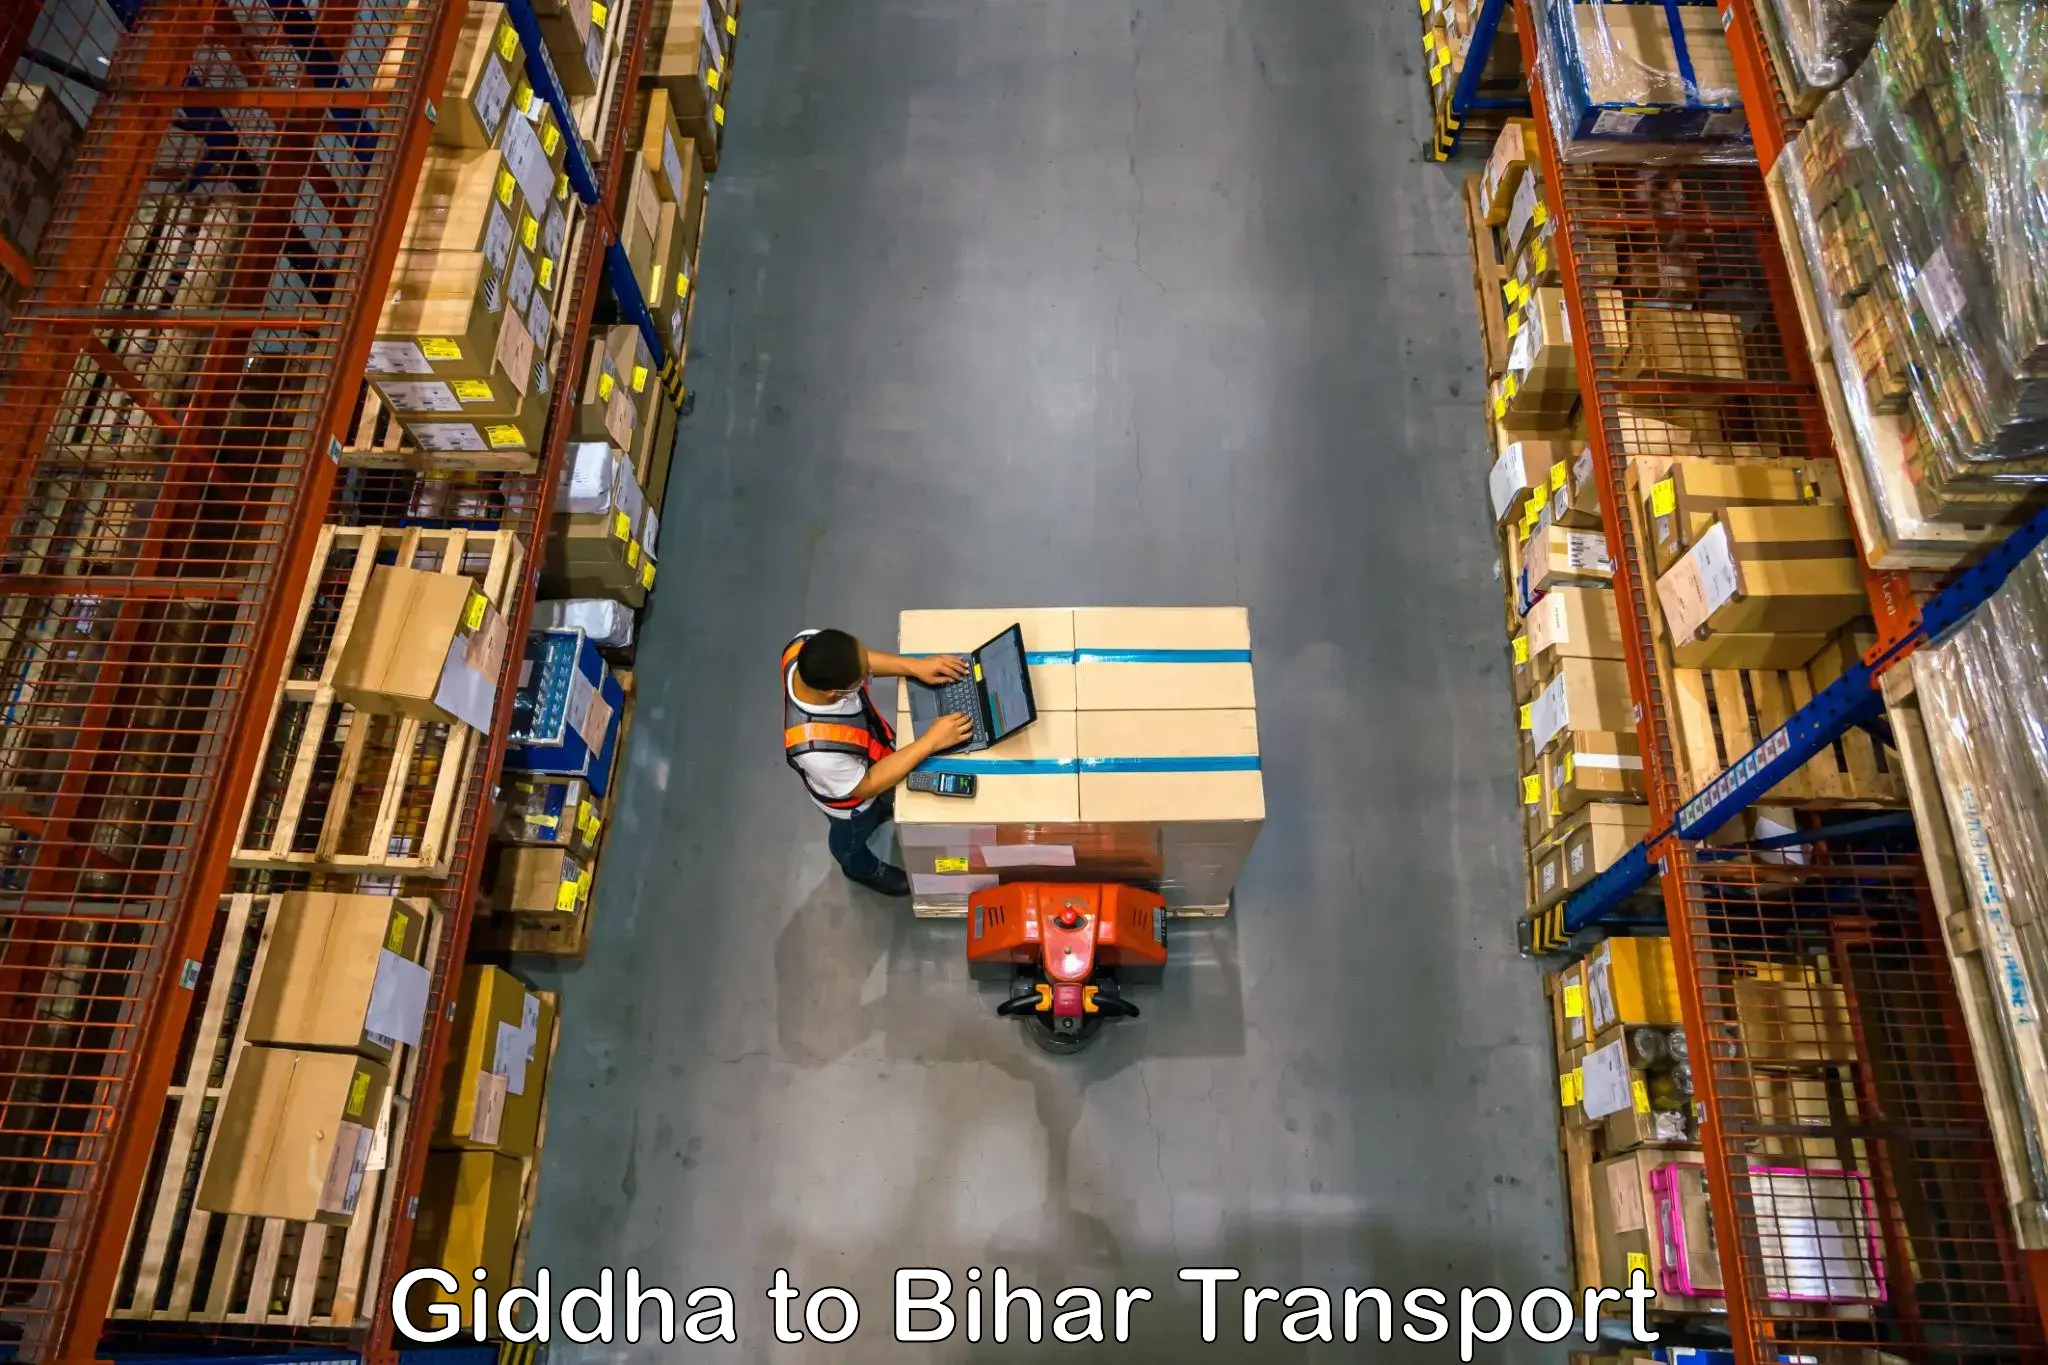 Bike shipping service Giddha to Sandesh